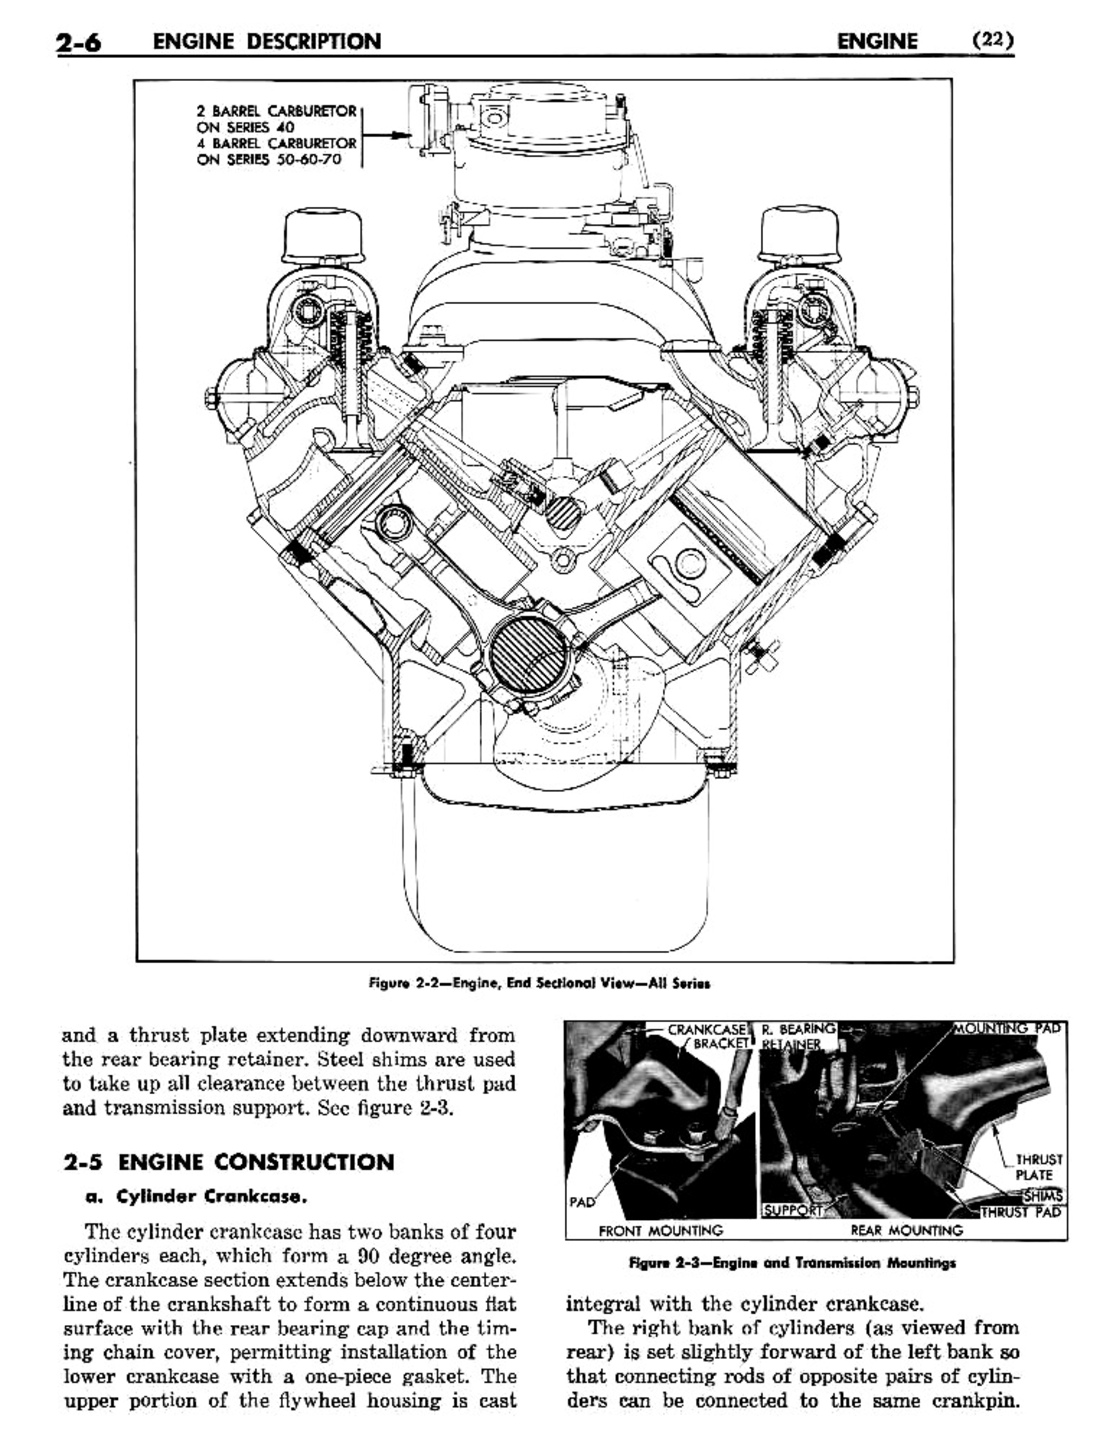 n_03 1956 Buick Shop Manual - Engine-006-006.jpg